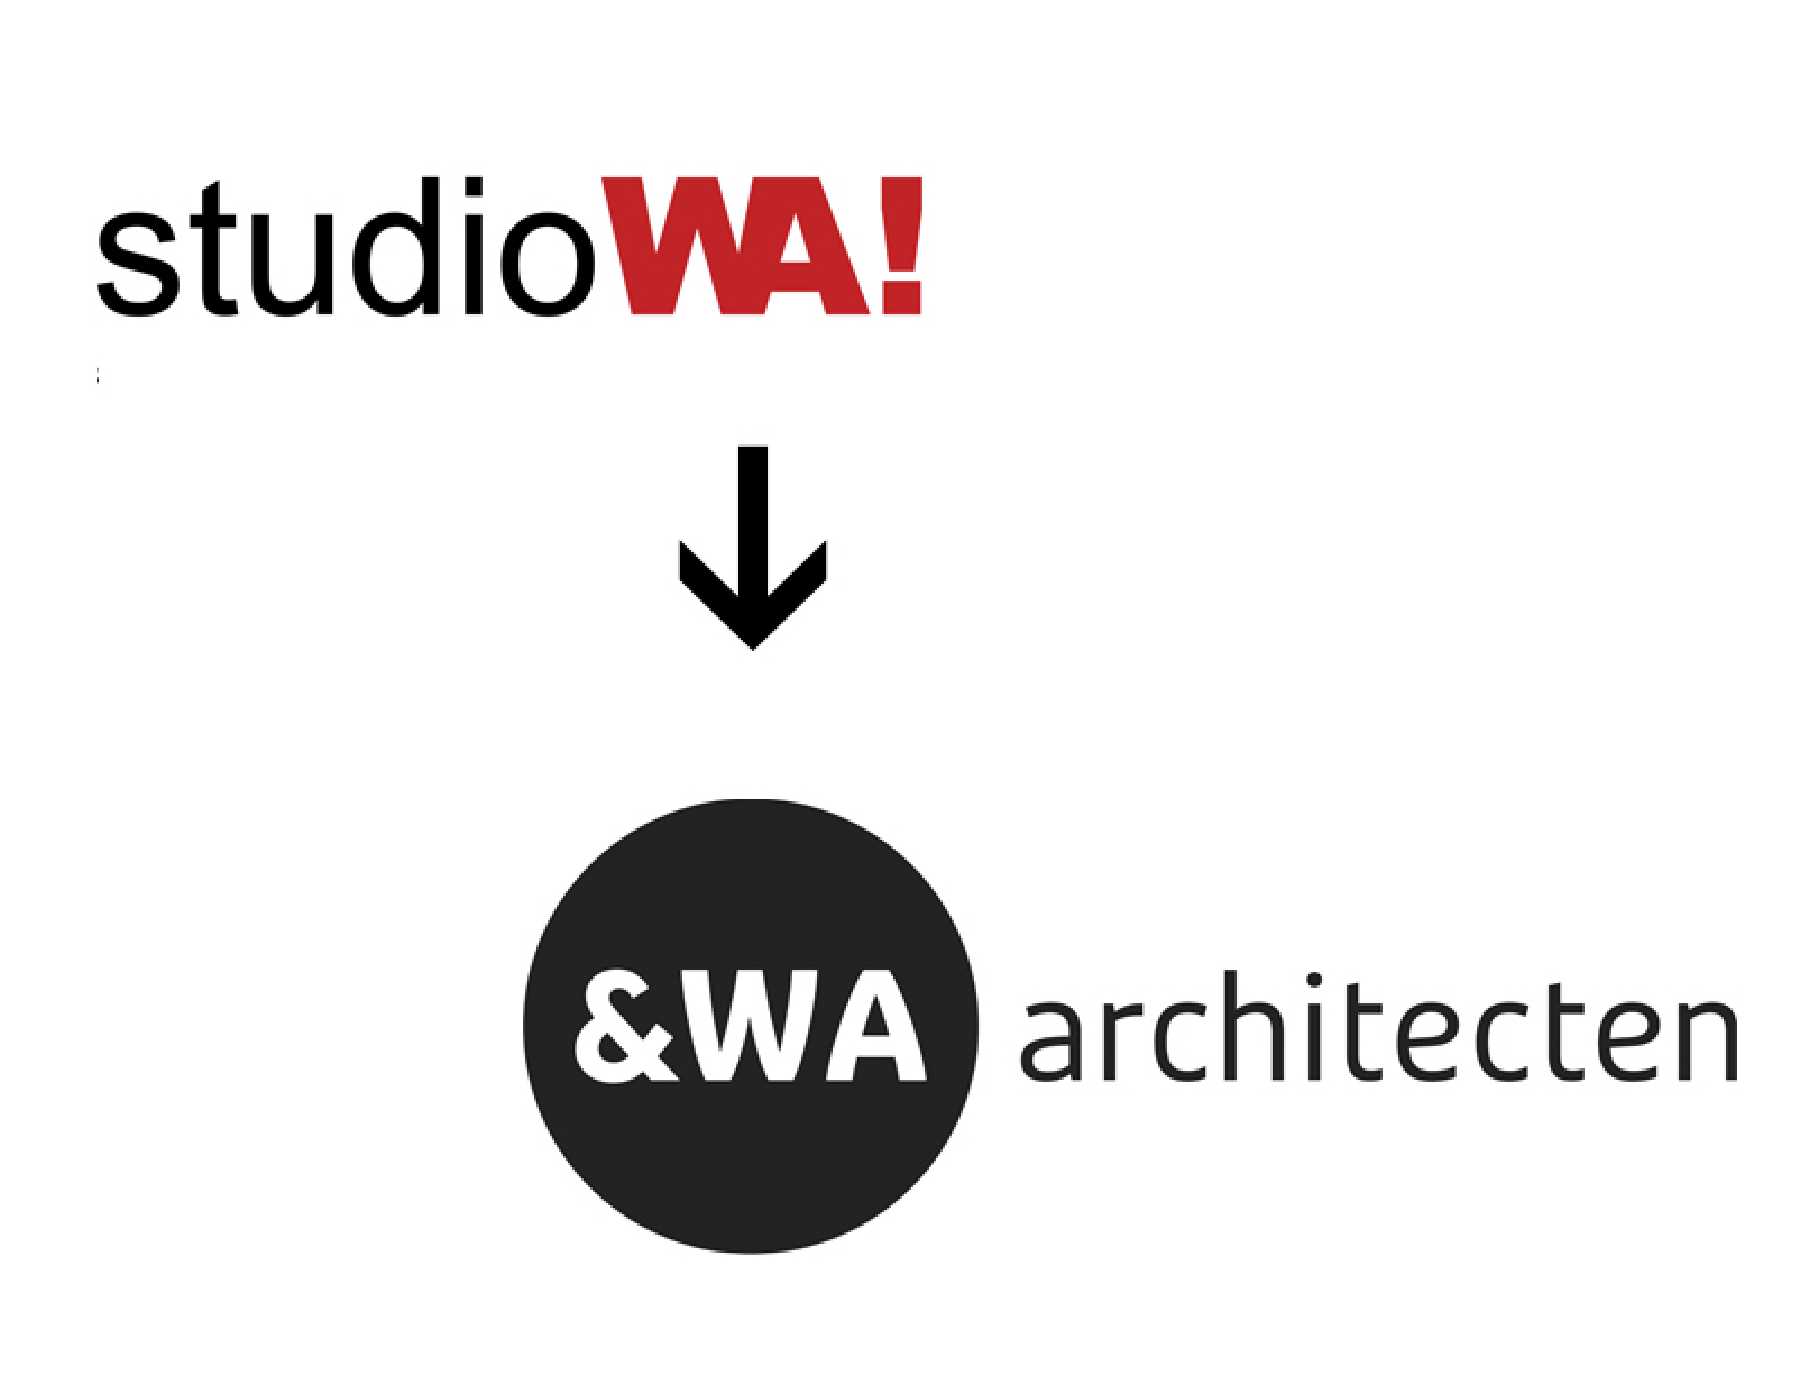 studioWA! is &WA architecten